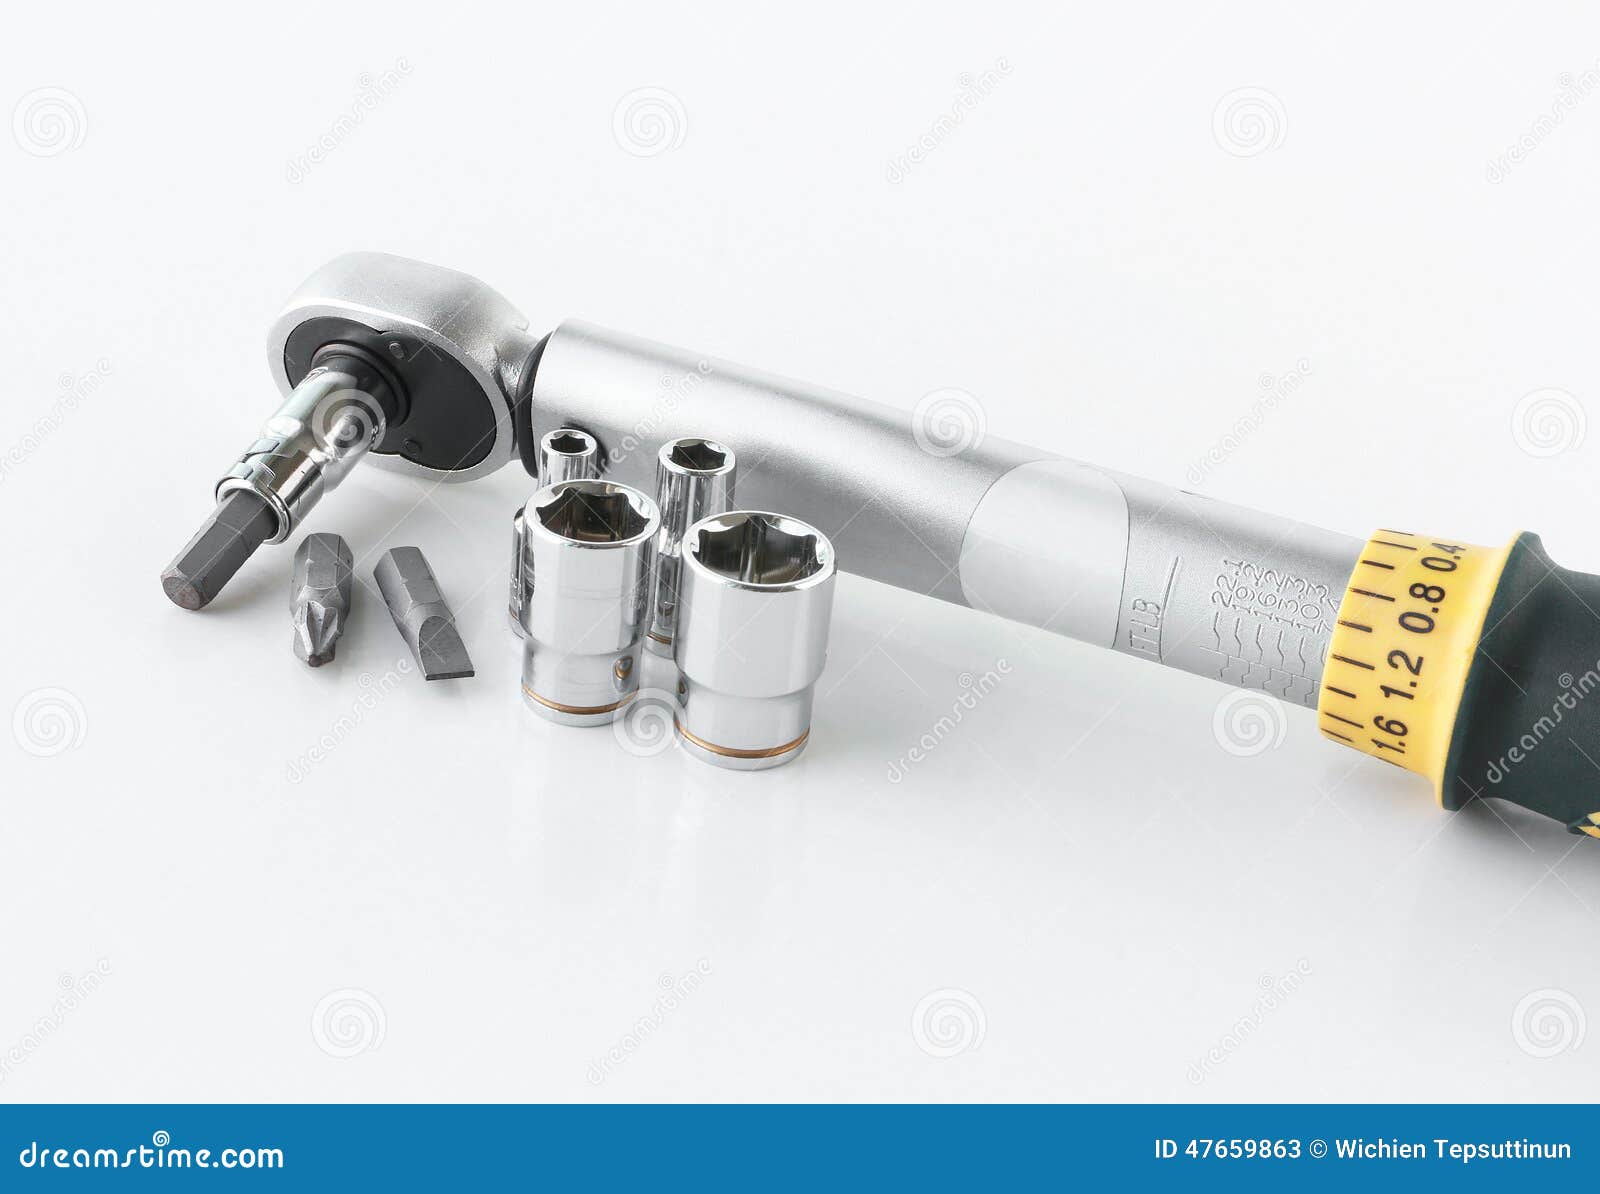 preset torque wrench ratchet on white background